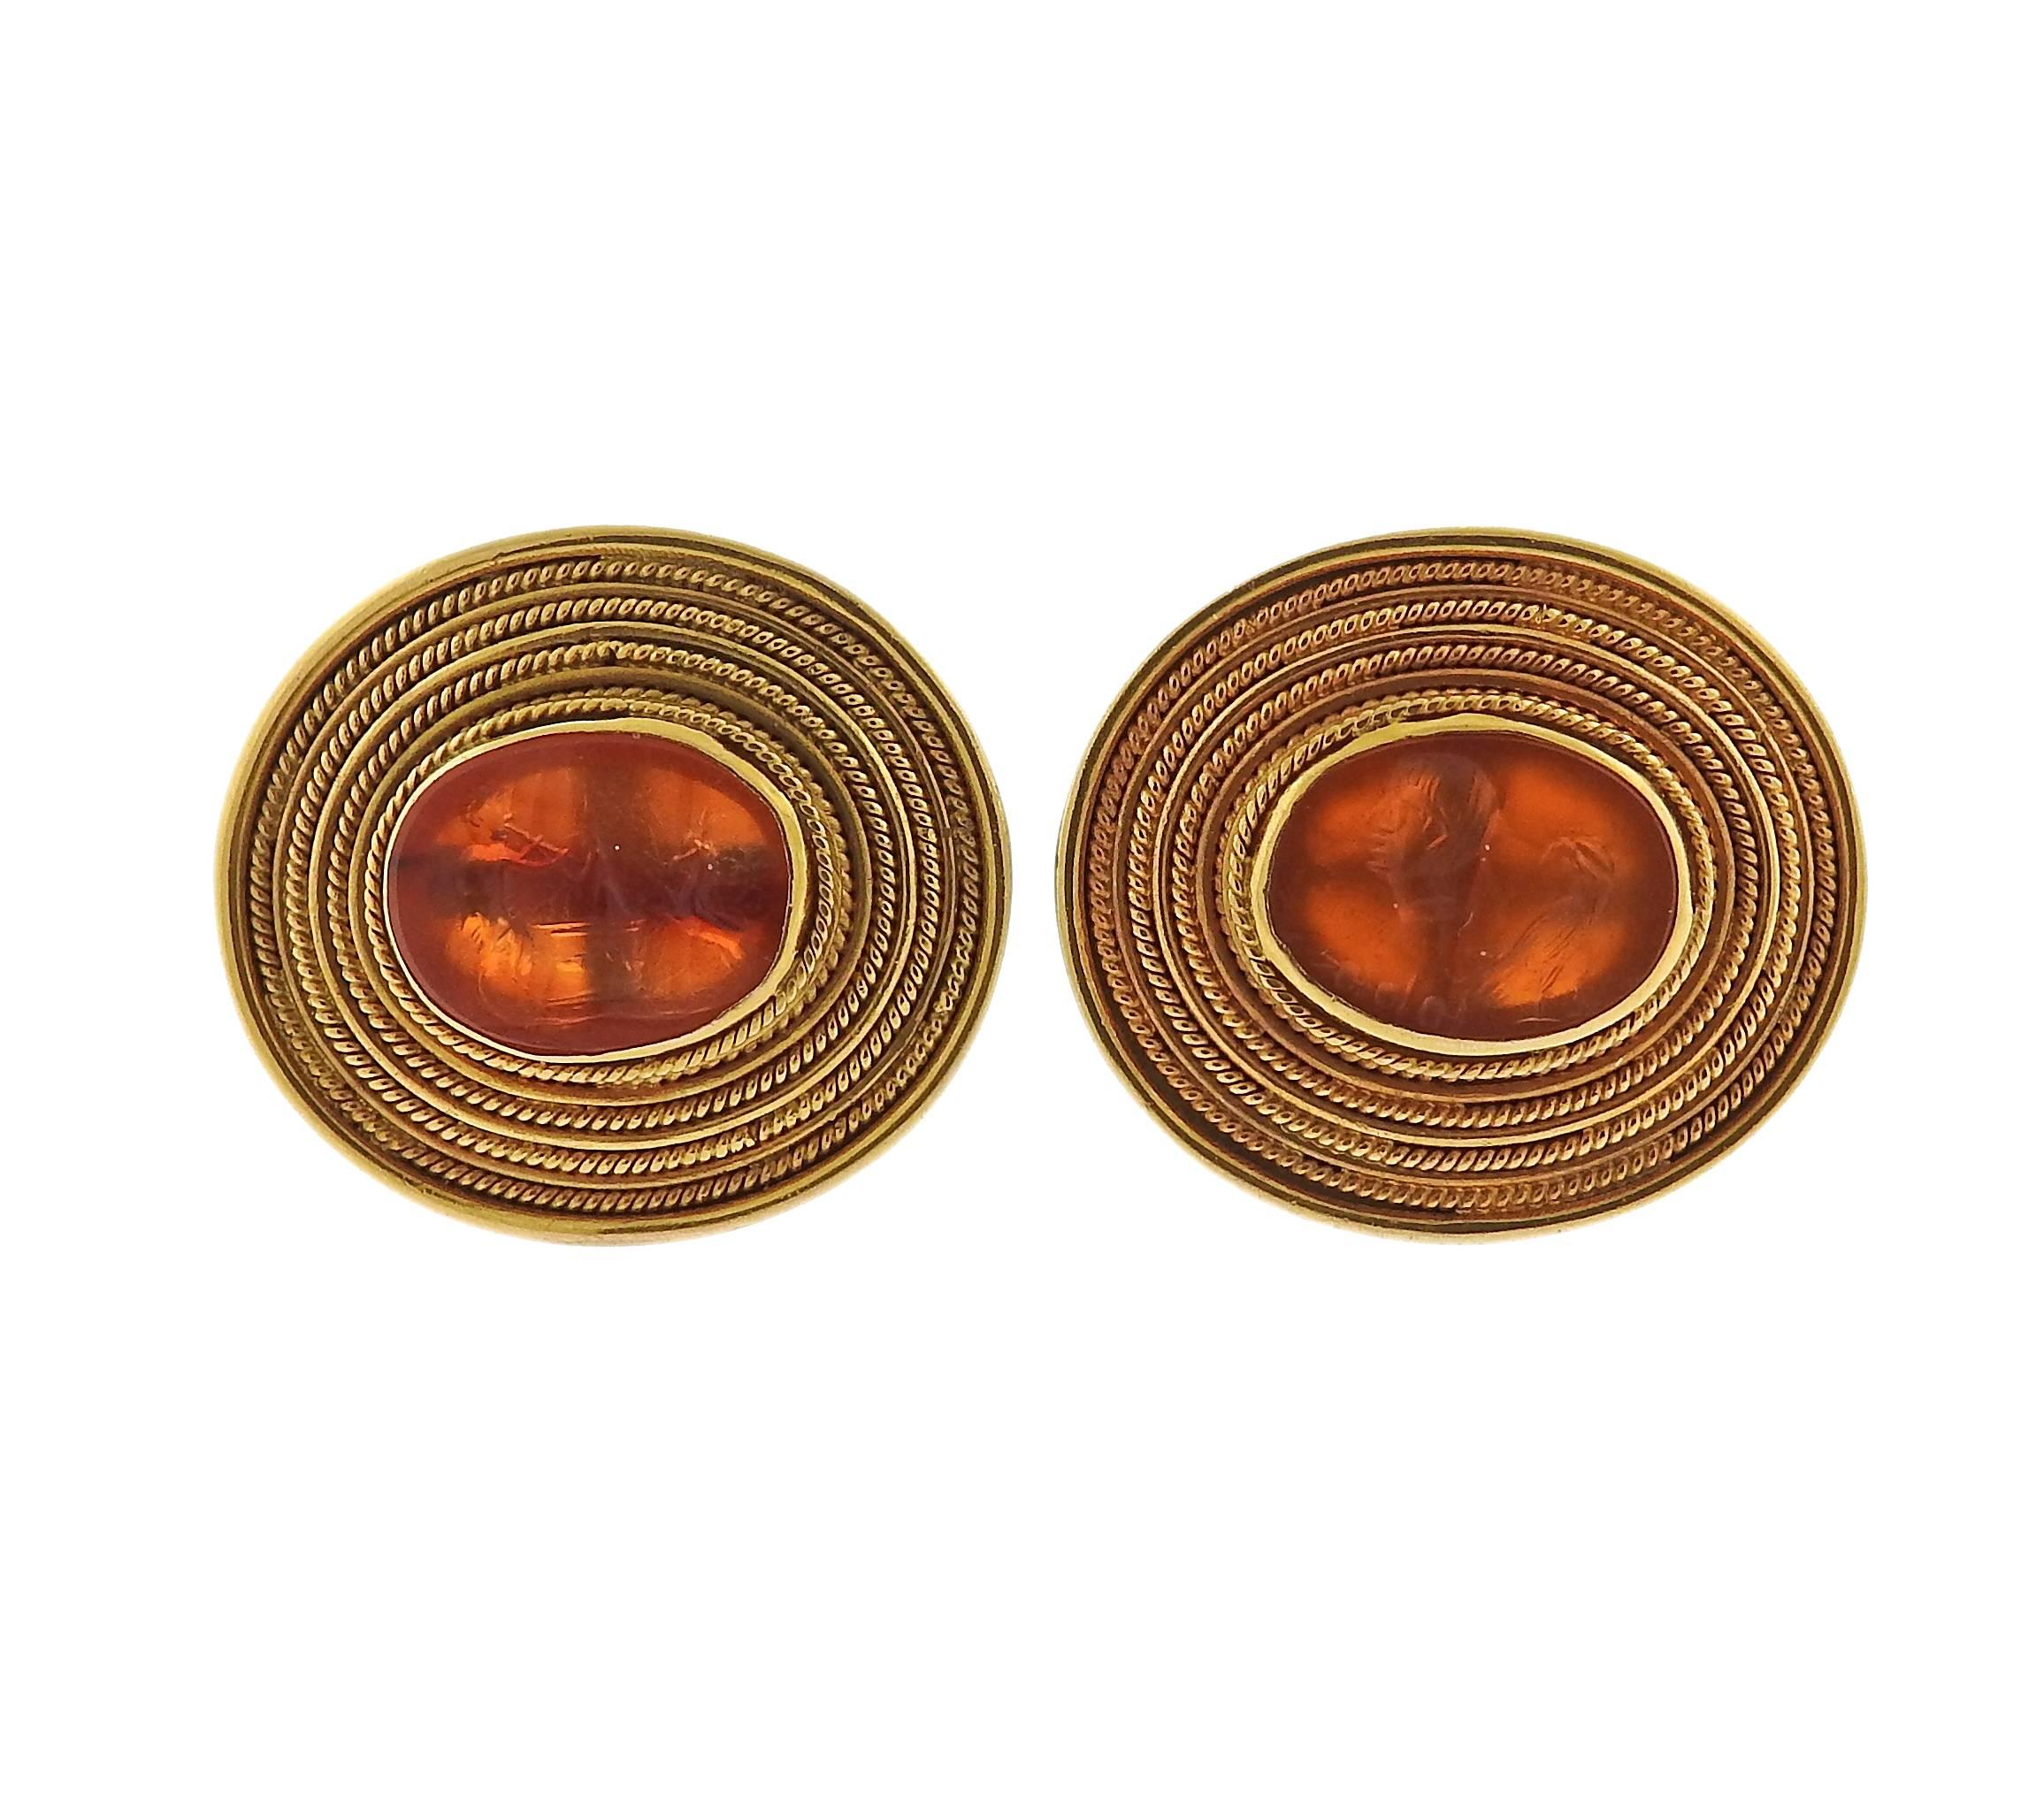 Pair of 14k gold cufflinks, set with Ancient Roman hardstone intaglio. Cufflink top is 22mm x 20mm, weight - 16 grams.